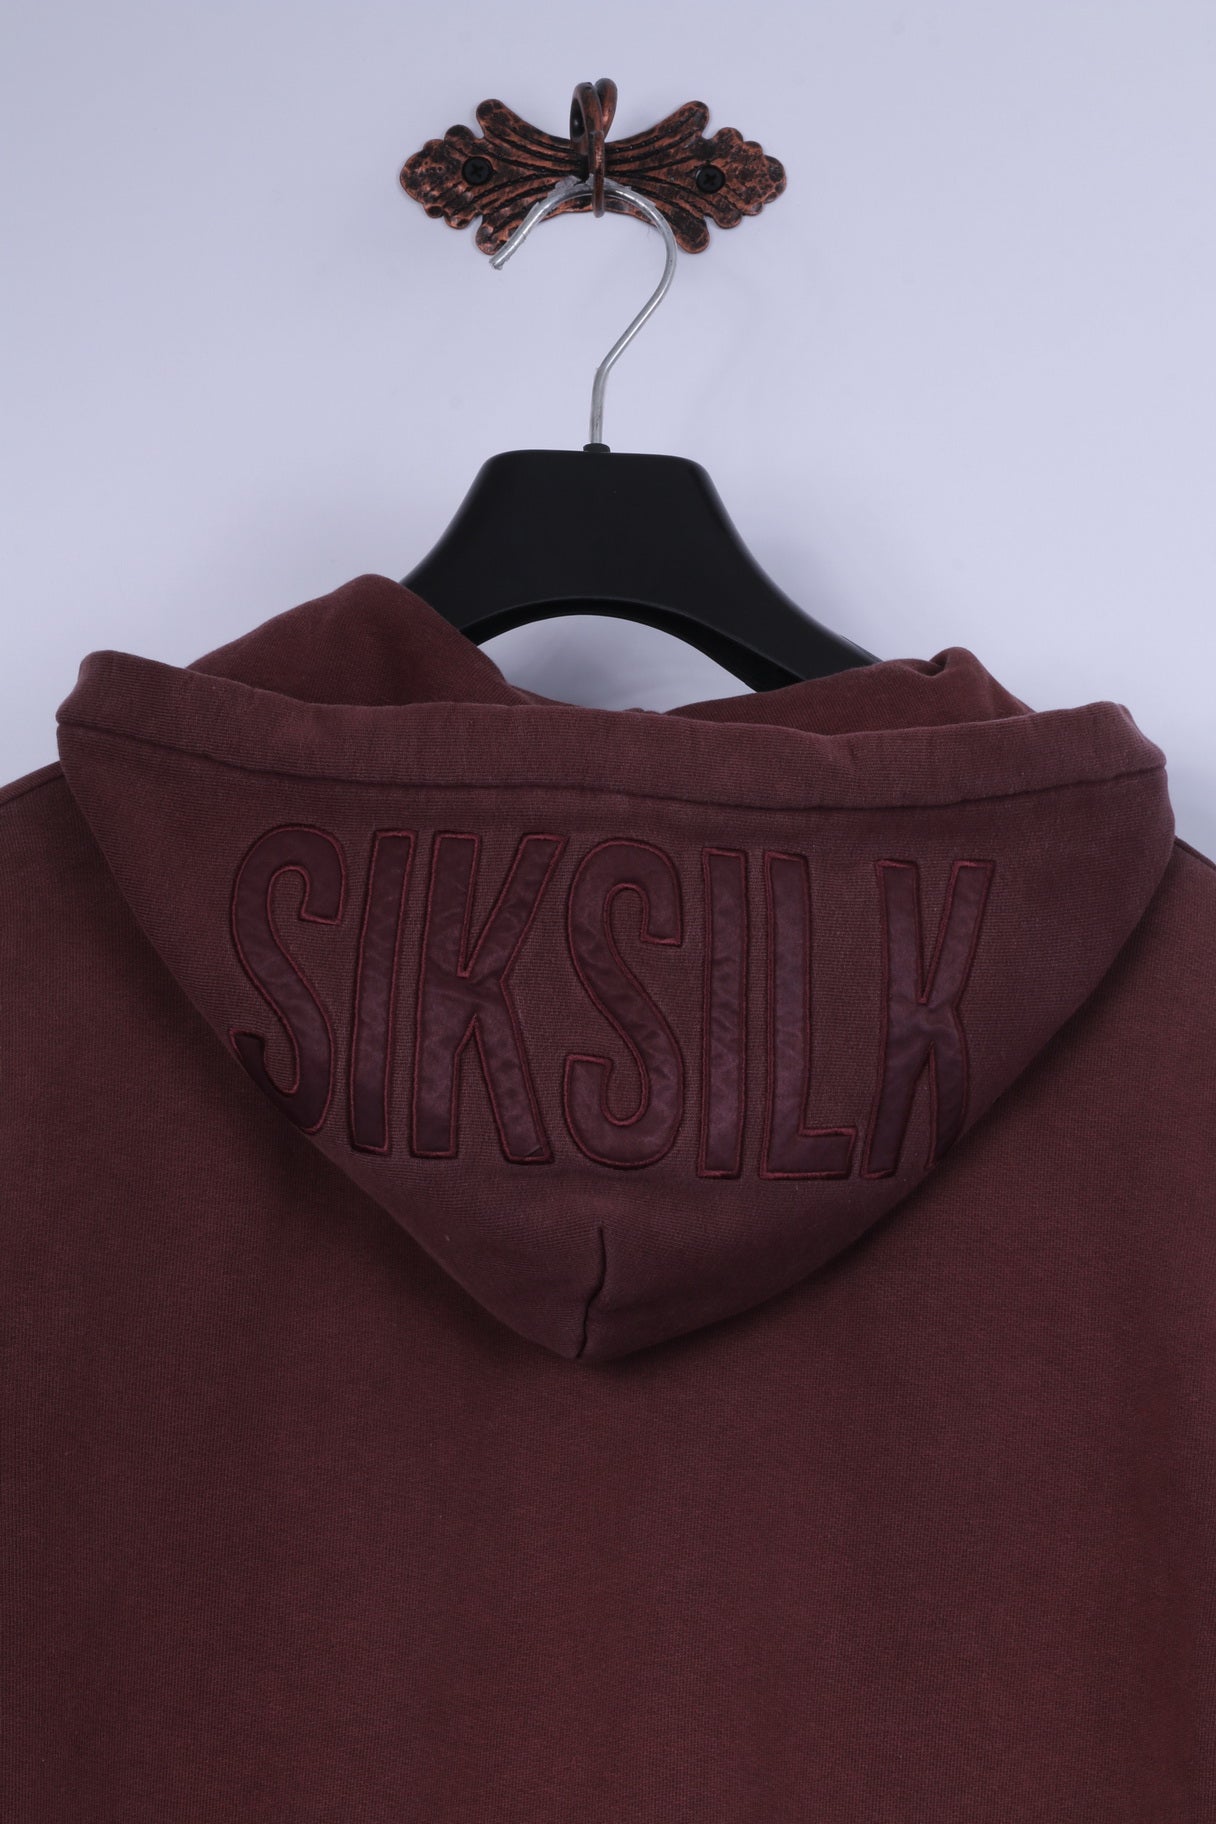 Sik Silk Mens S Sweatshirt Burgundy Cotton Zip Up Hooded Sportswear Top